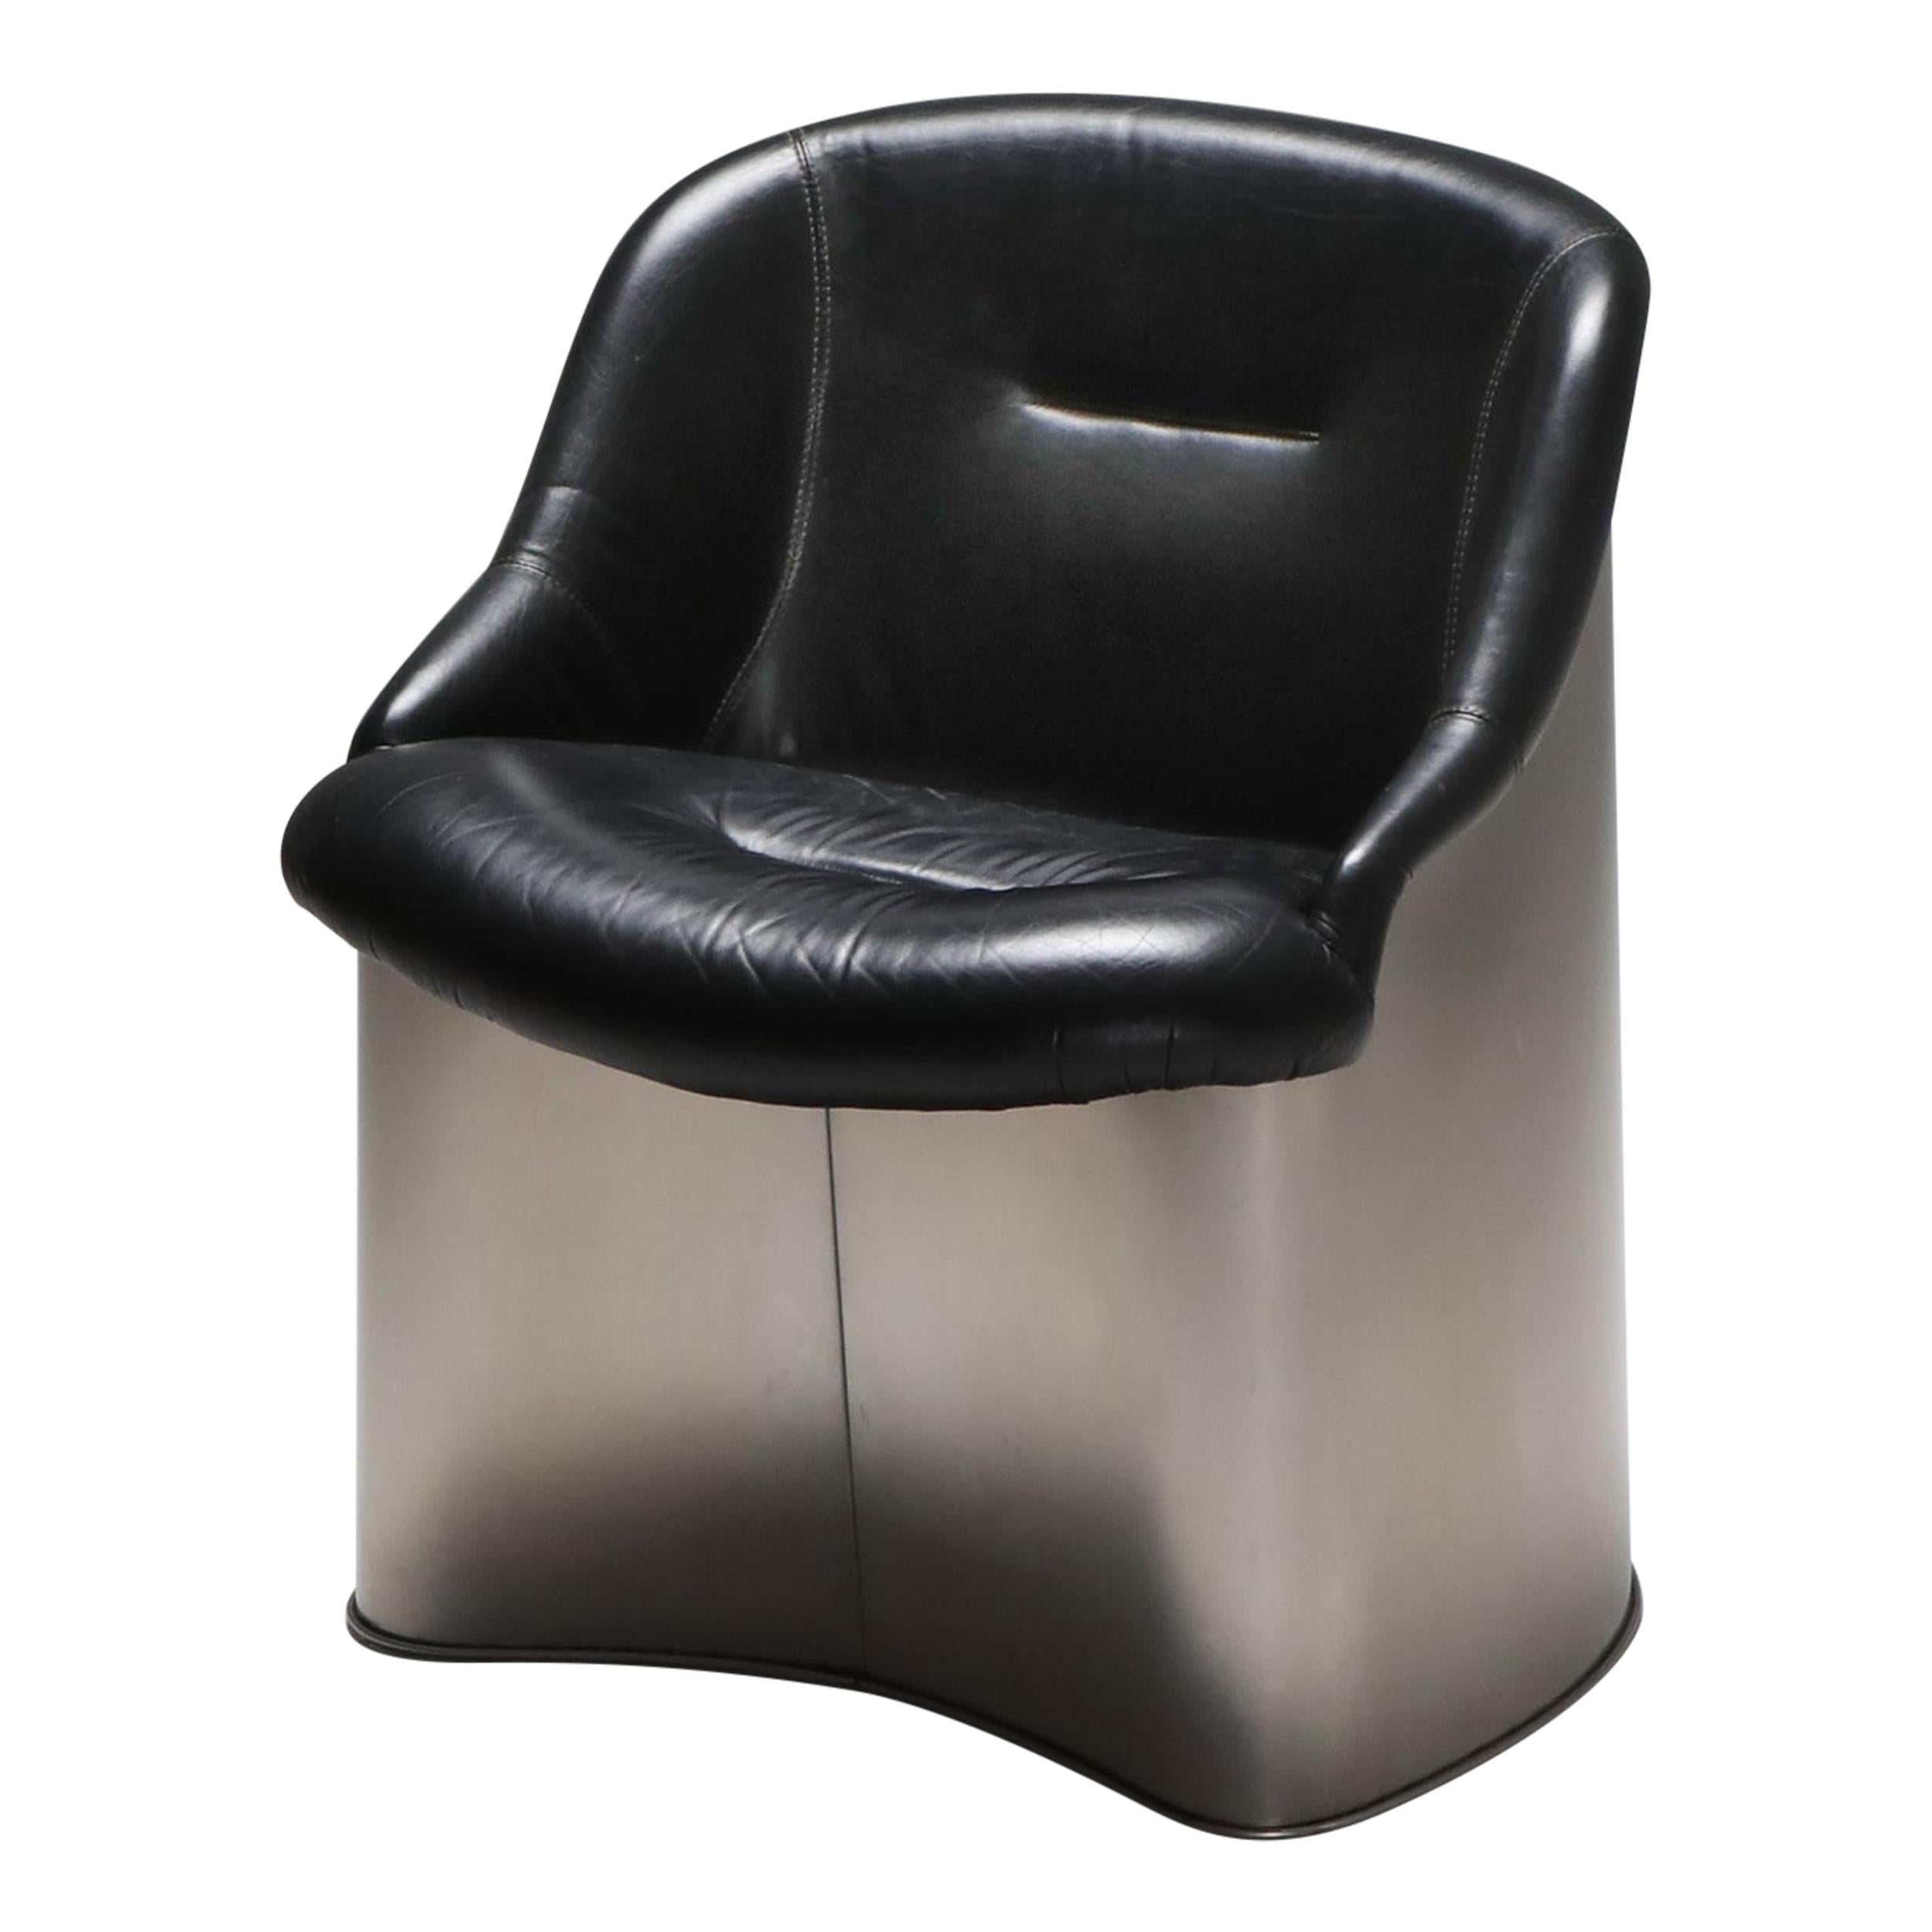 Boris Tabaccof Leather and Metal Easy Chair